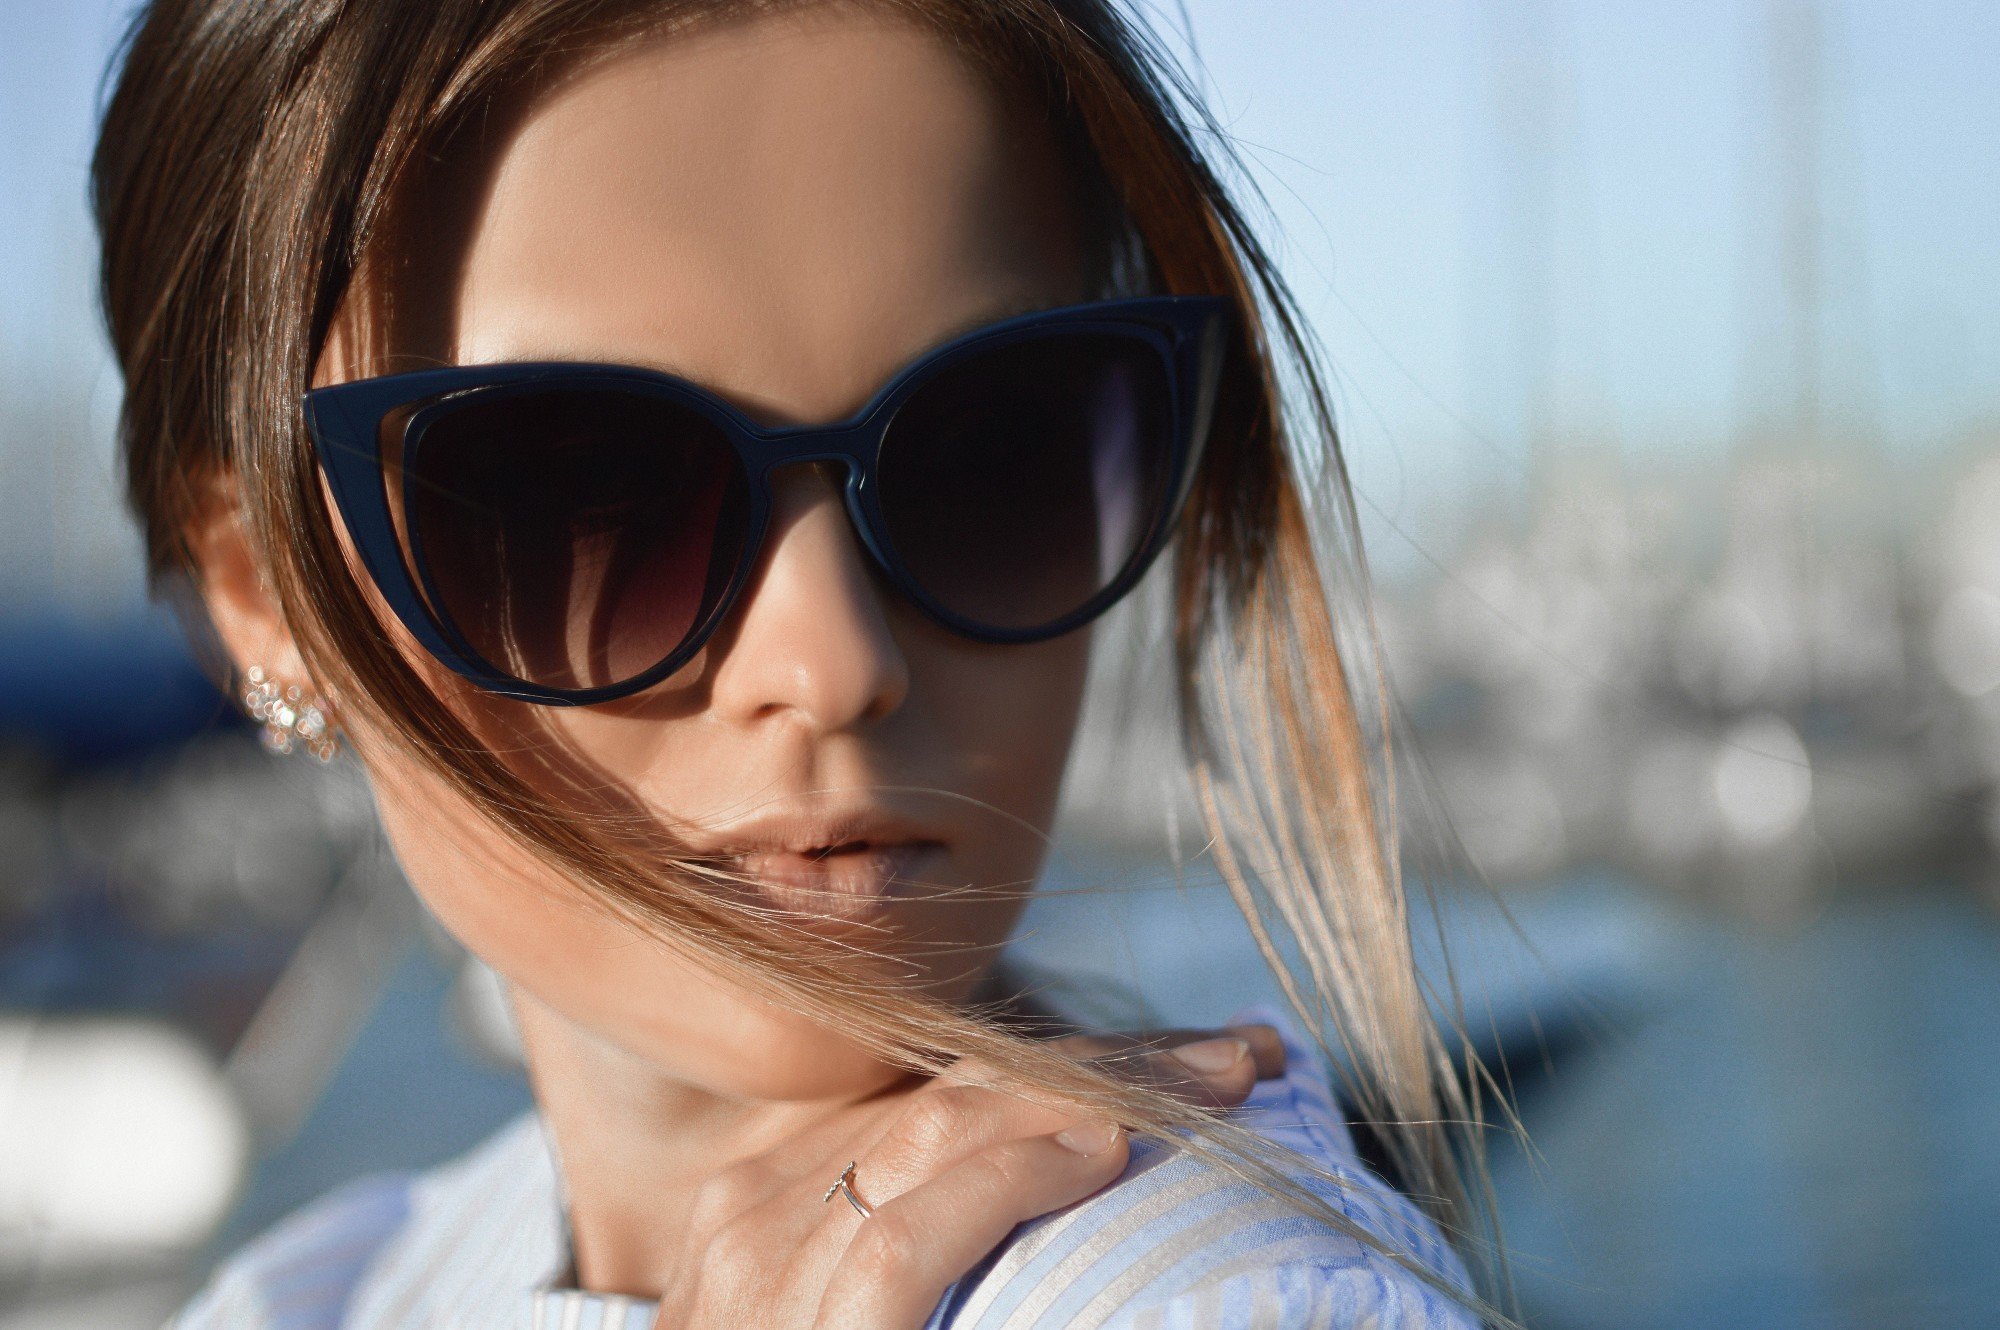 A woman facing sideways wearing designer sunglasses